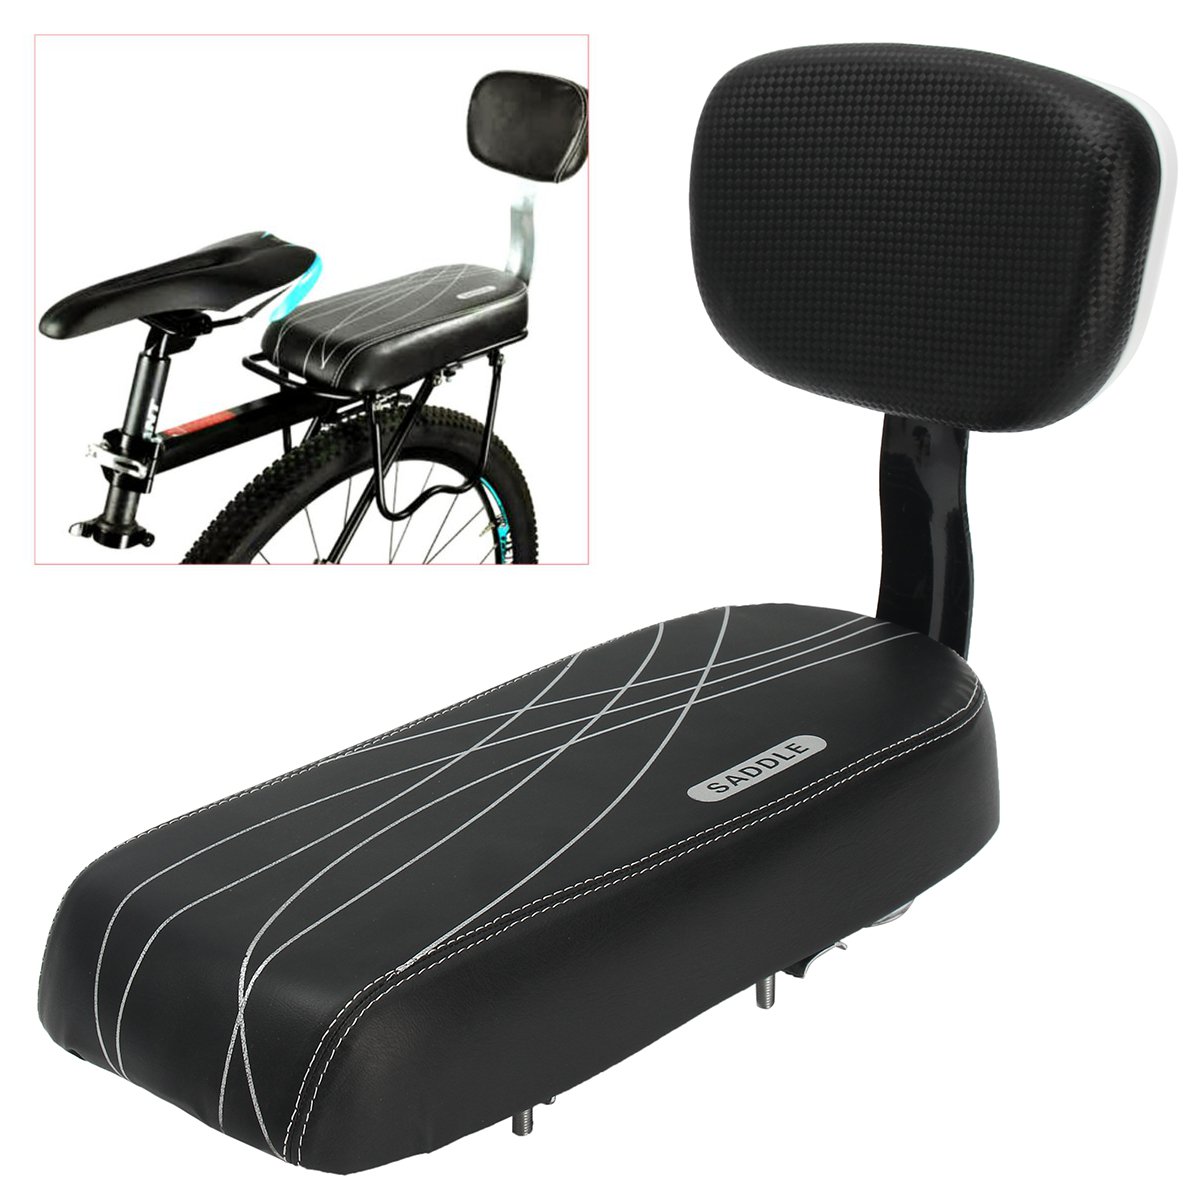 

BIKIGHT Black Bicycle Comfort Gel Bike Seat Pad Cushion Cover Back Rest 13'' Wide Saddle